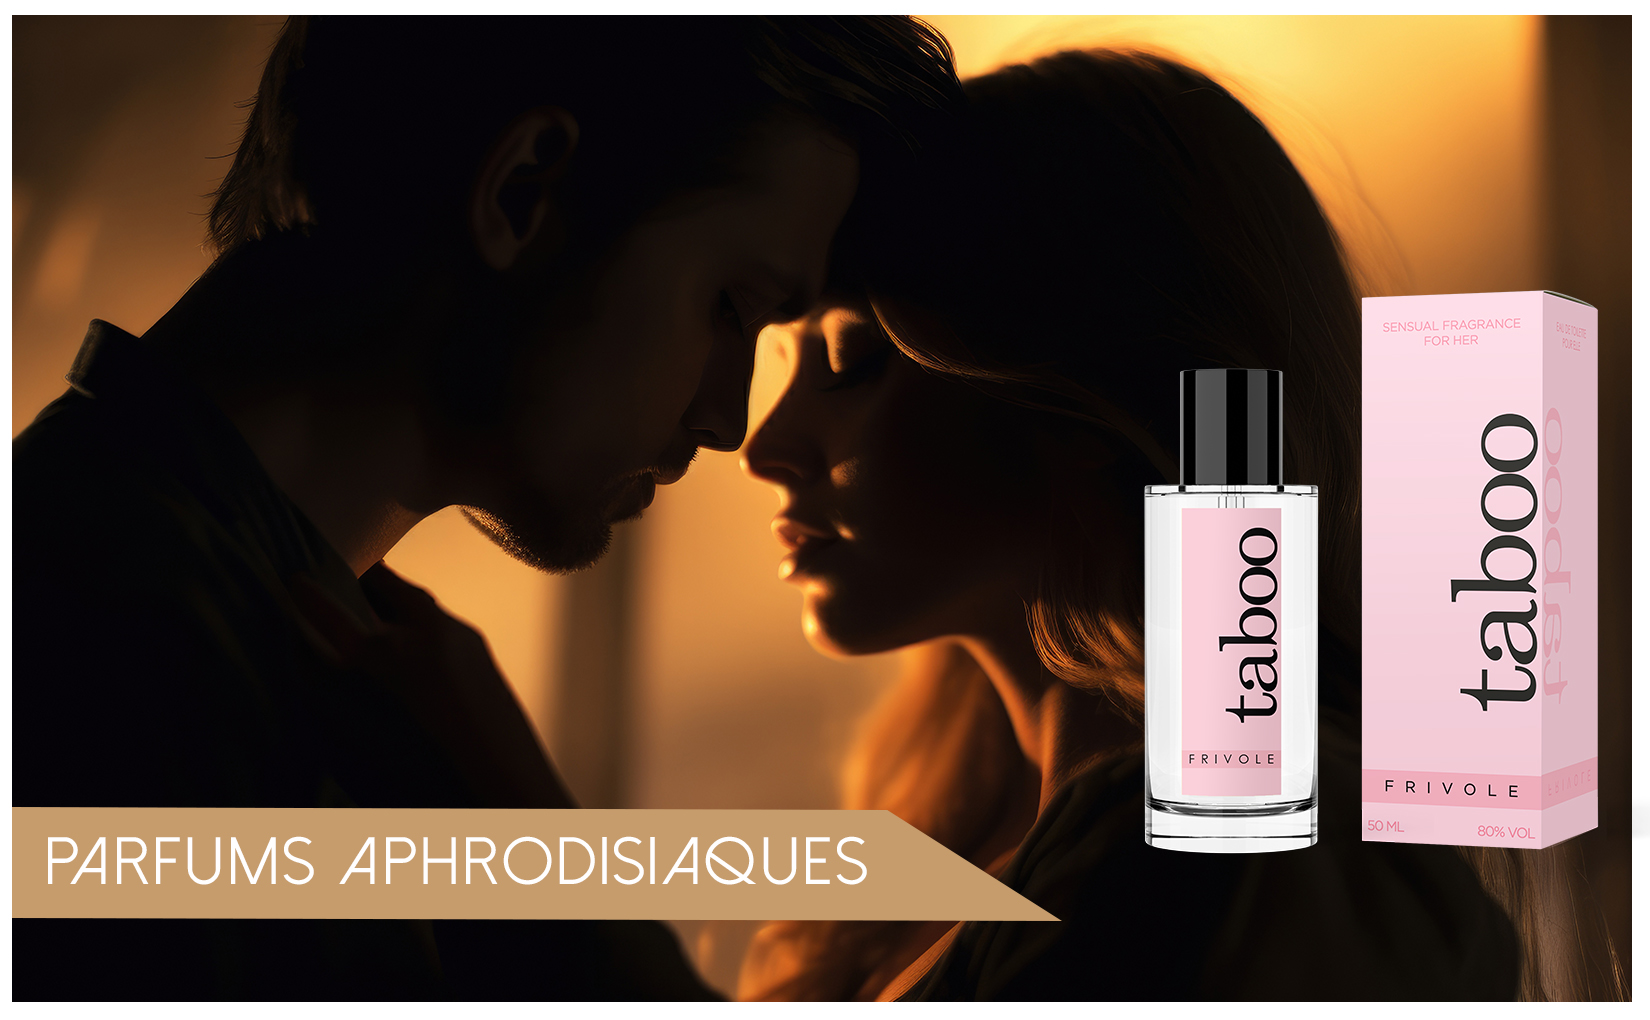 Taboo sensual aphrodisiac fragrance